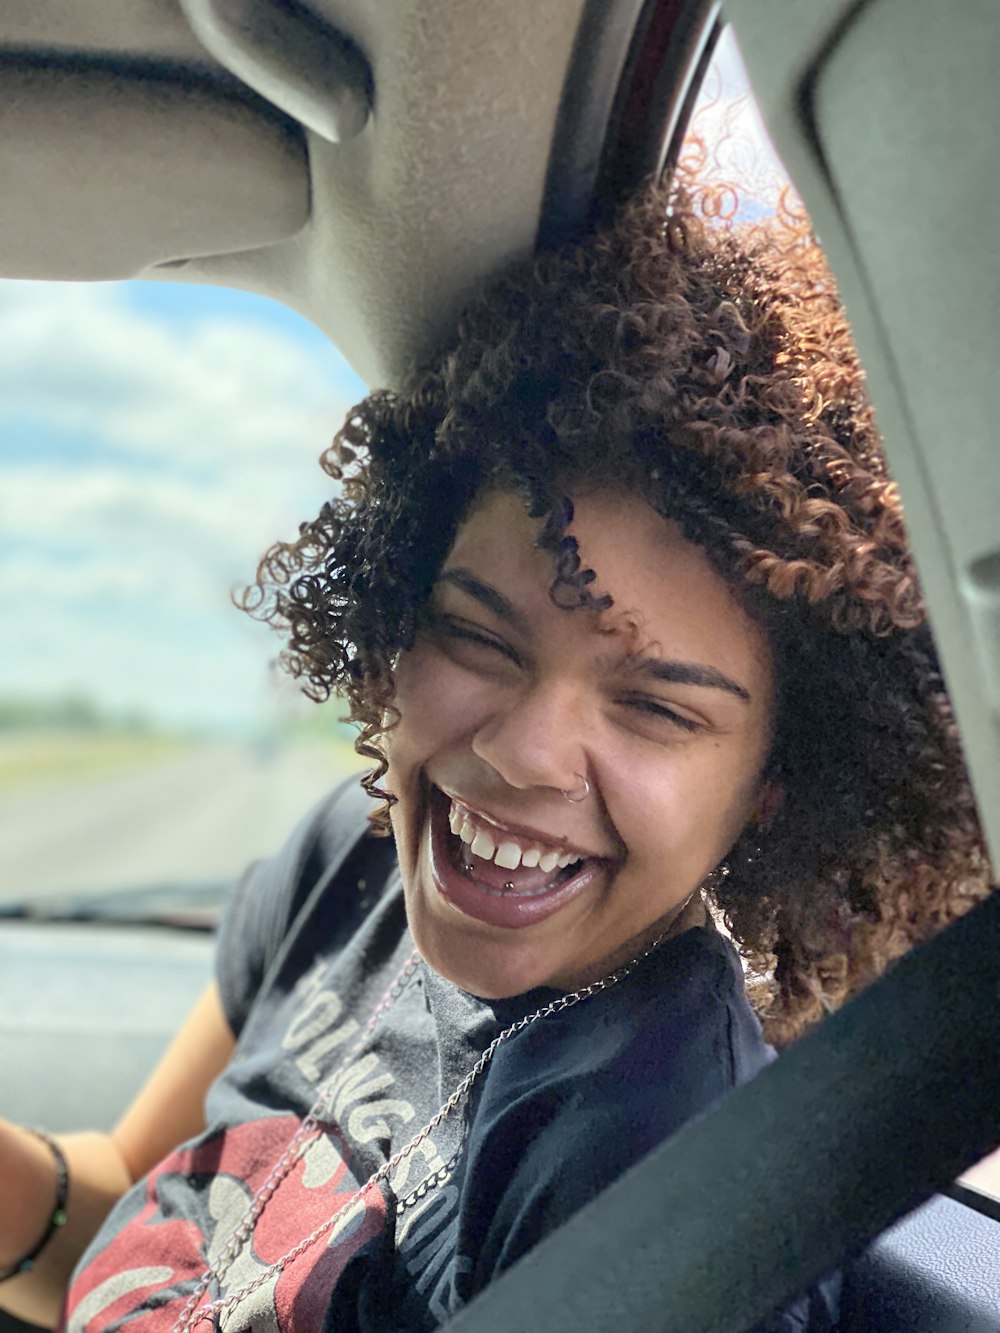 smiling woman in gray shirt sitting inside car during daytime